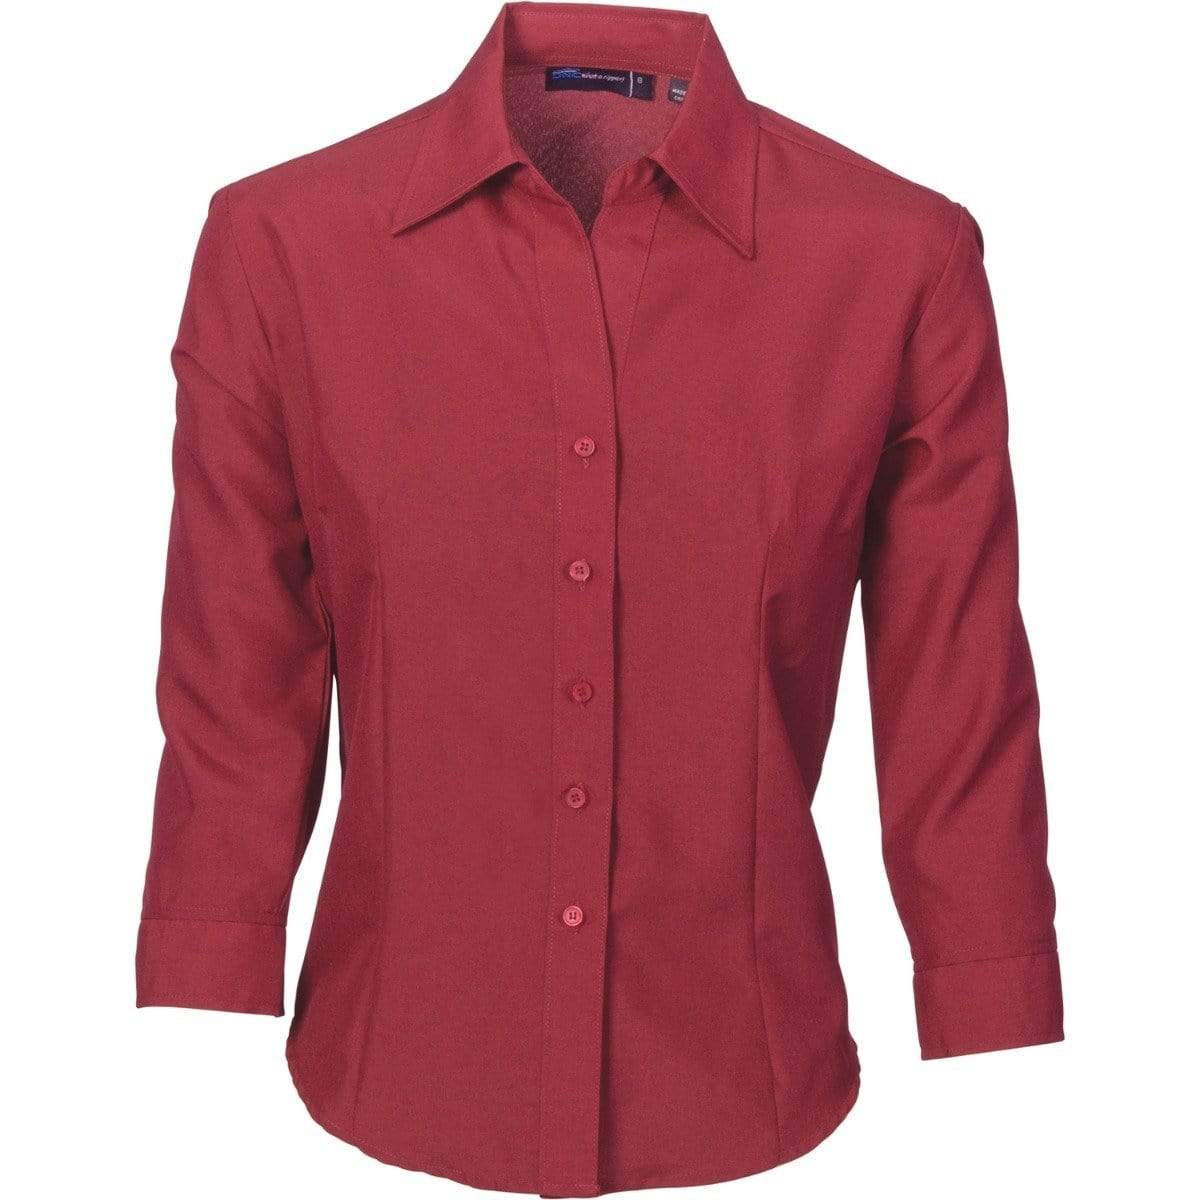 Dnc Workwear Ladies Cool-breathe 3/4 Sleeve Shirt - 4238 Corporate Wear DNC Workwear Cherry 6 